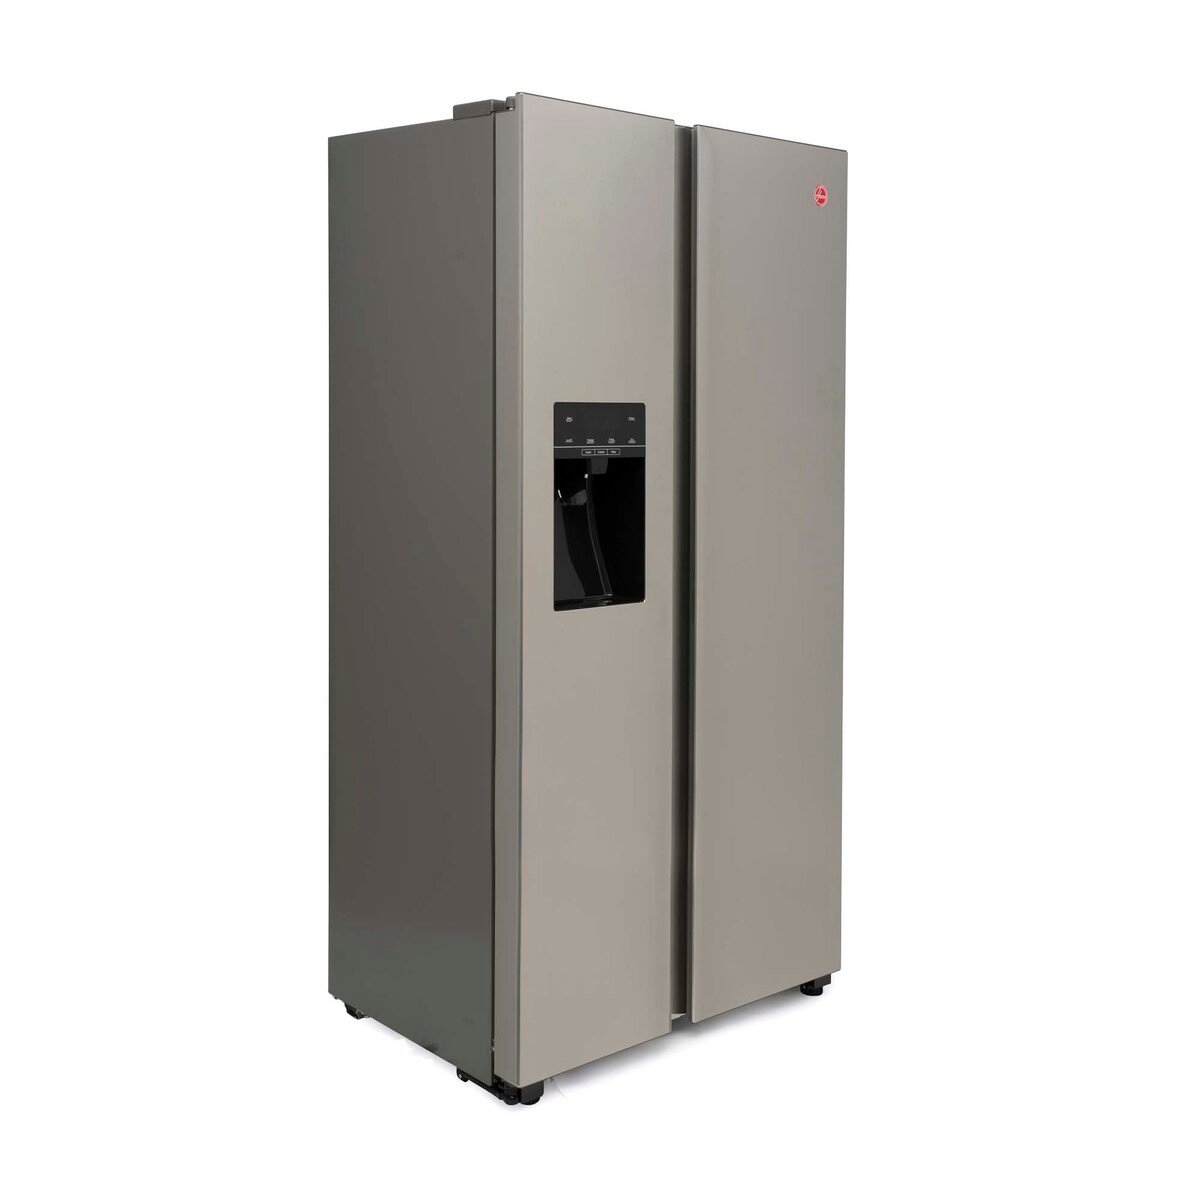 Hoover Side by Side Refrigerator HSB-H508WS 508LTR